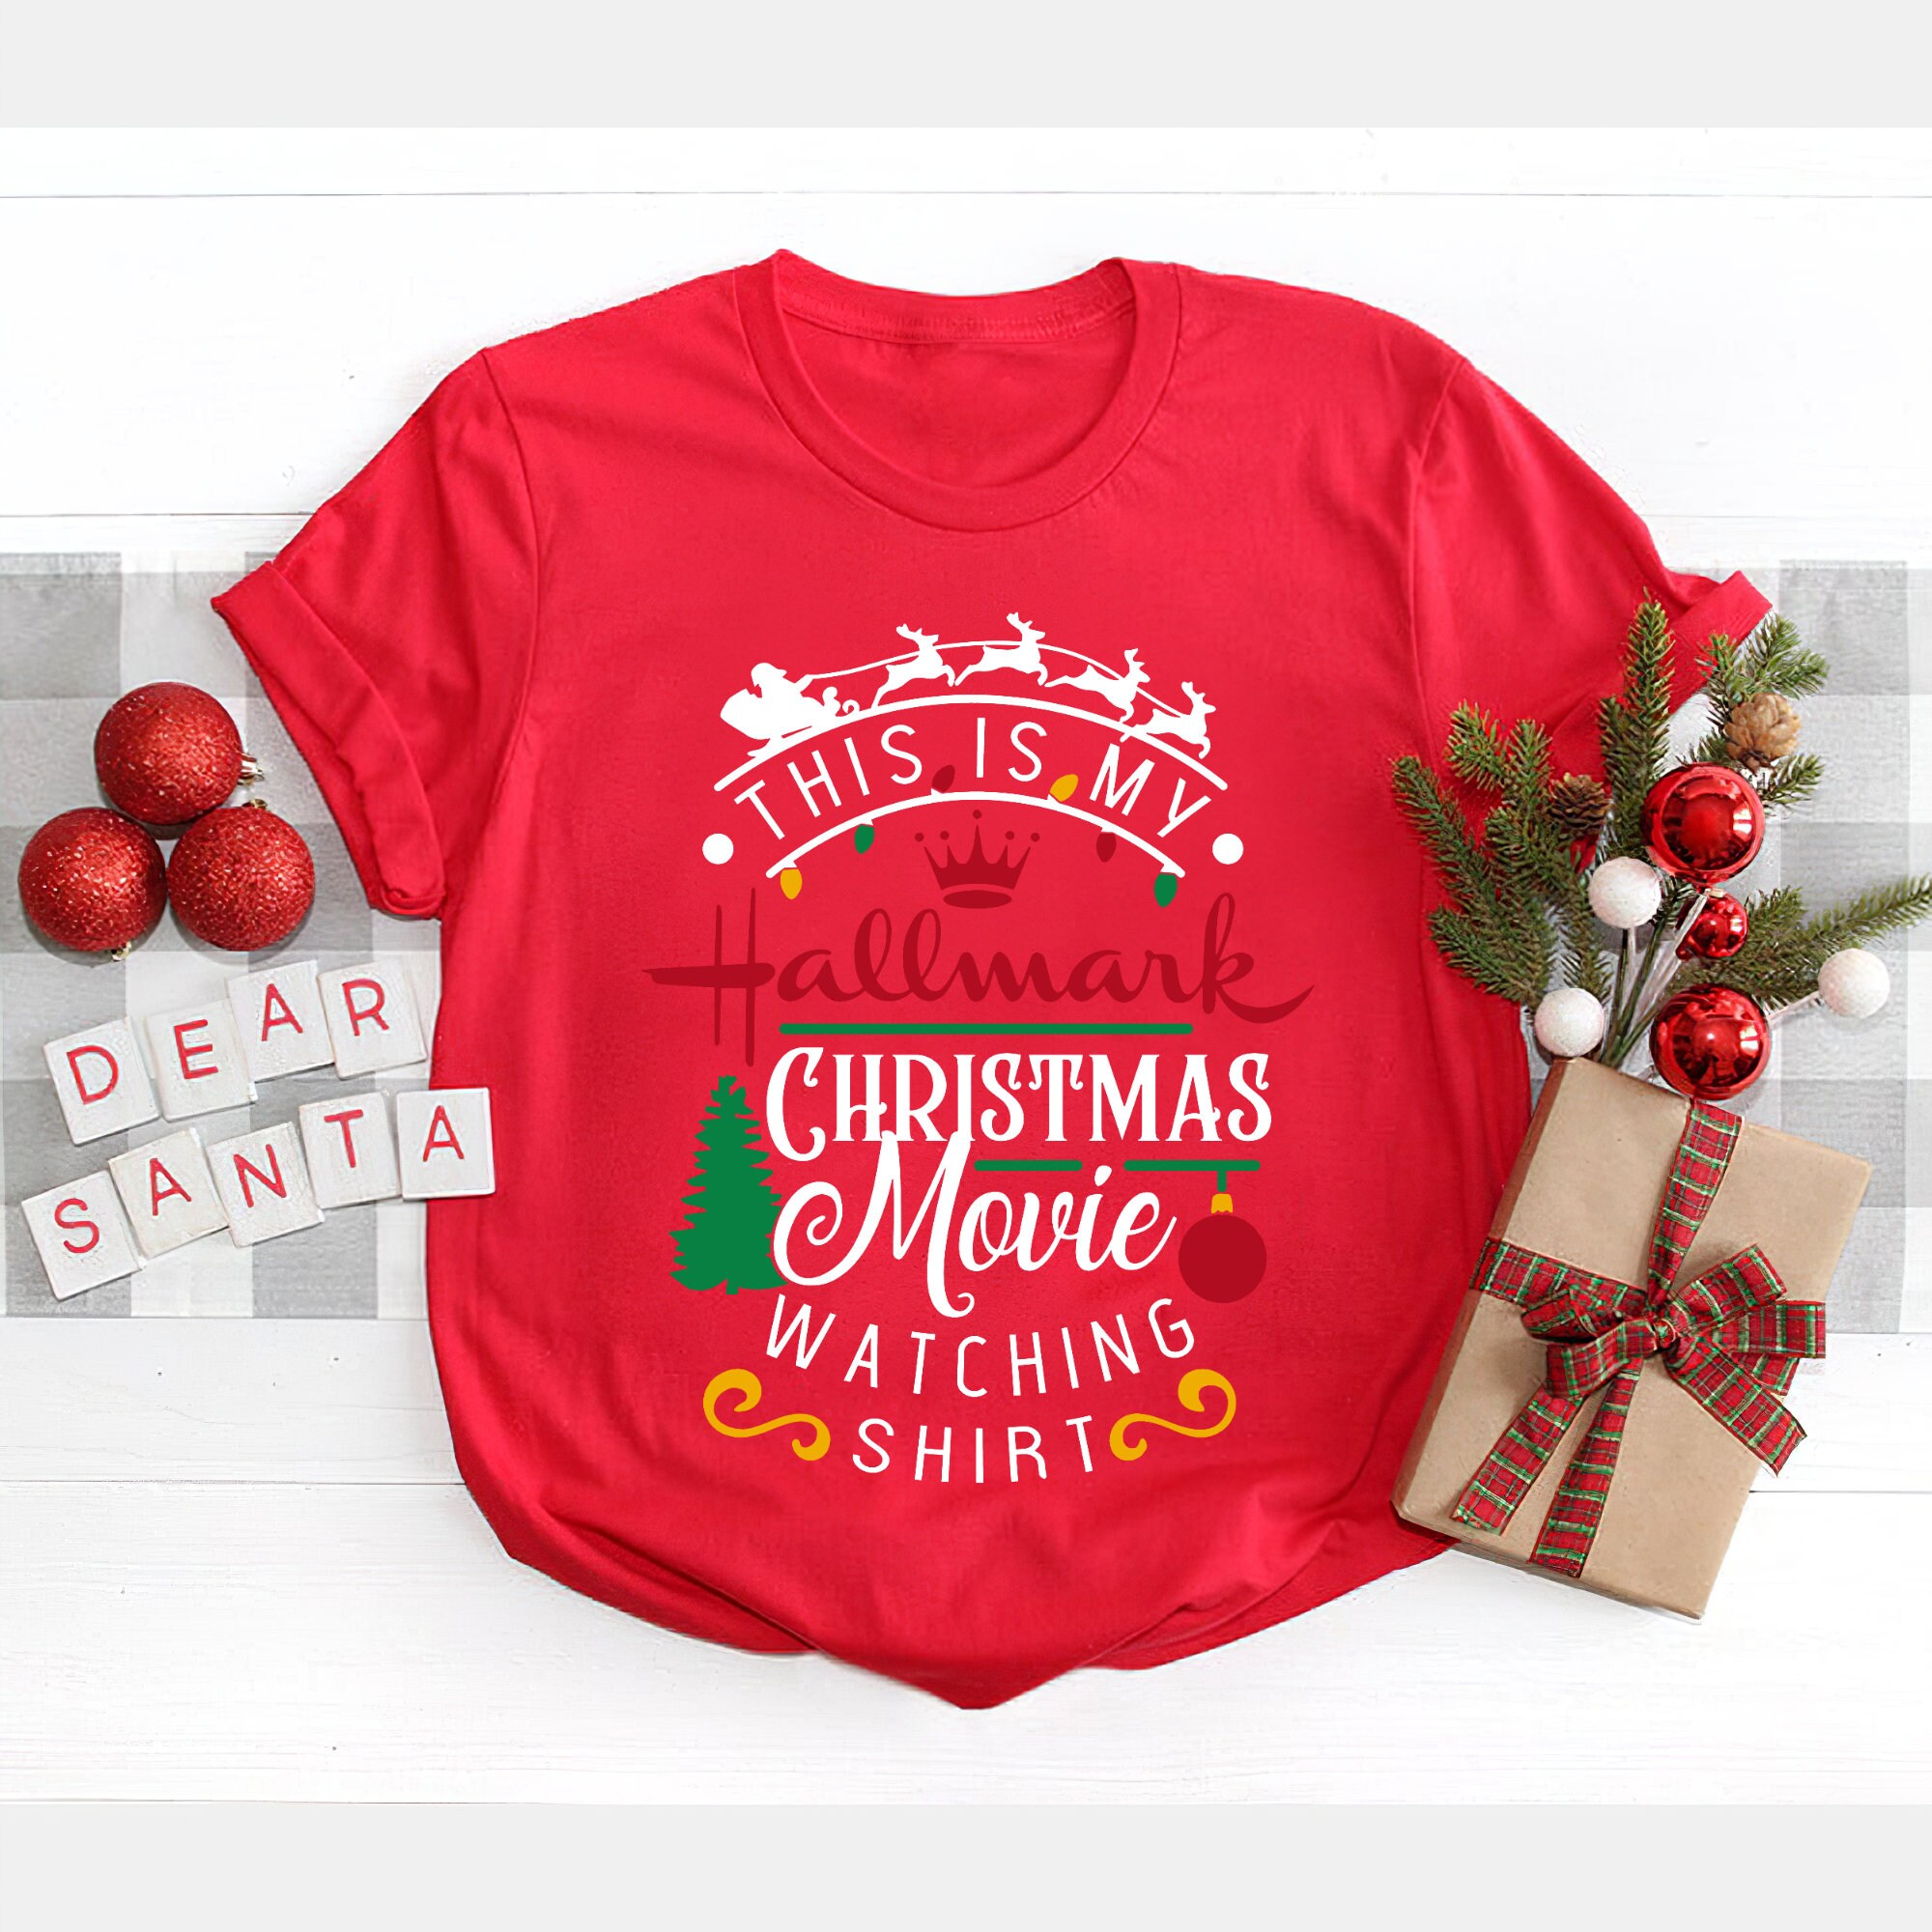 This Girl Love Christmas Movies Hallmark Watching Shirt